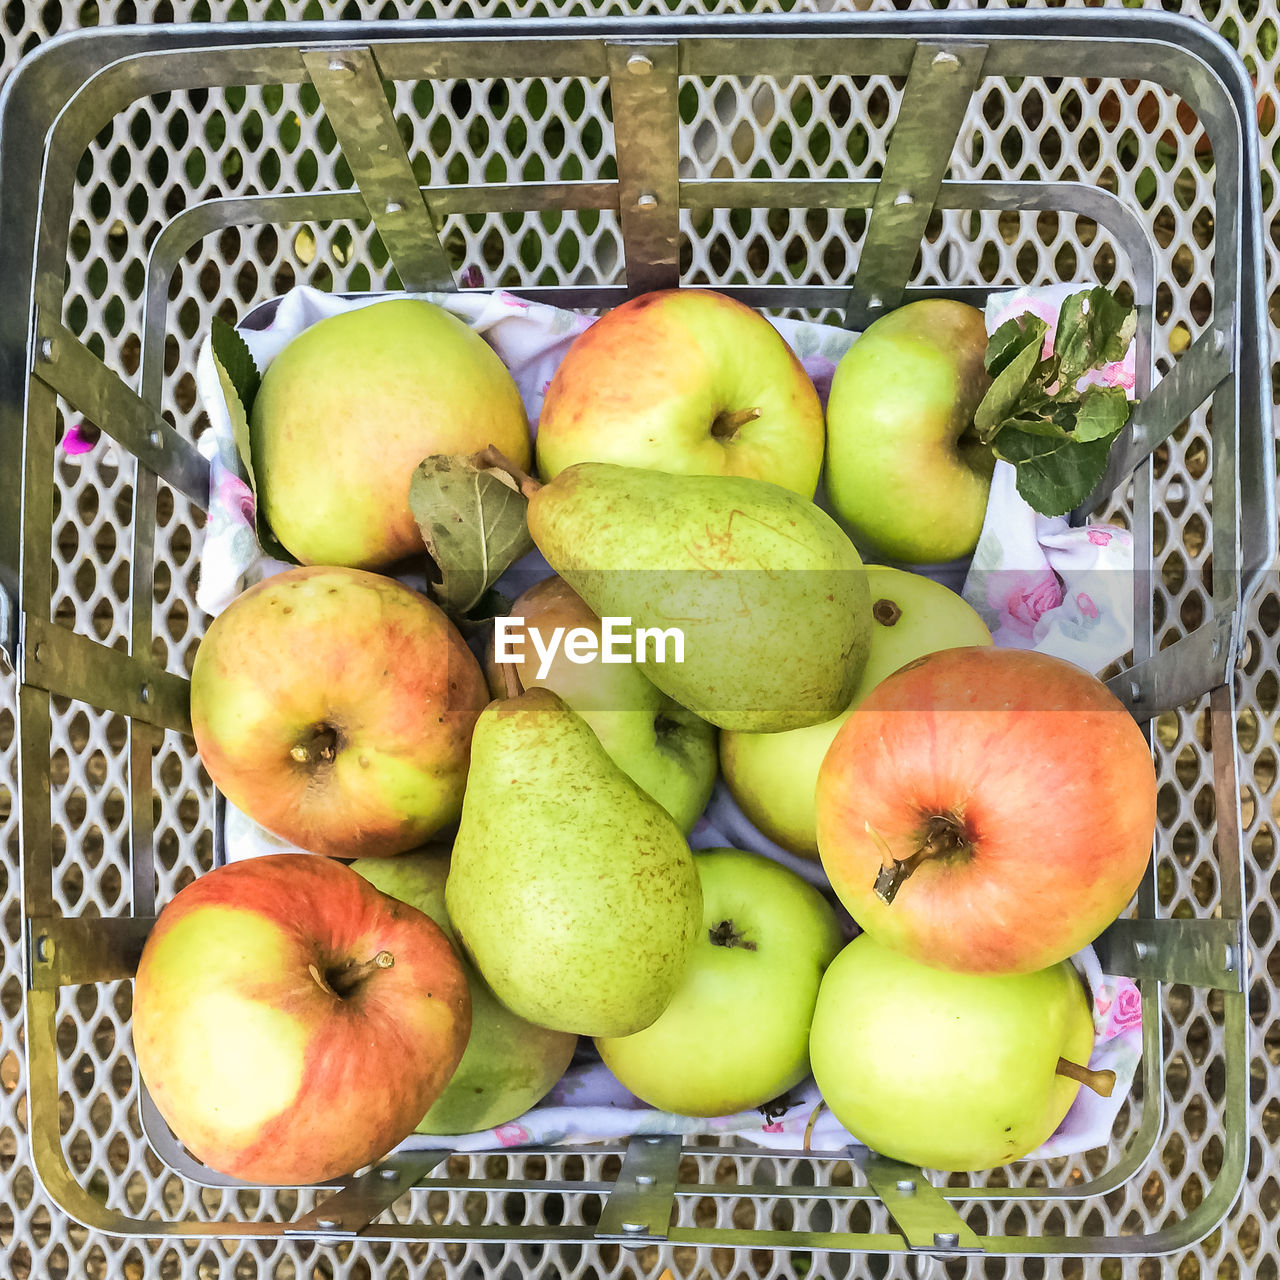 Fresh fruits in basket